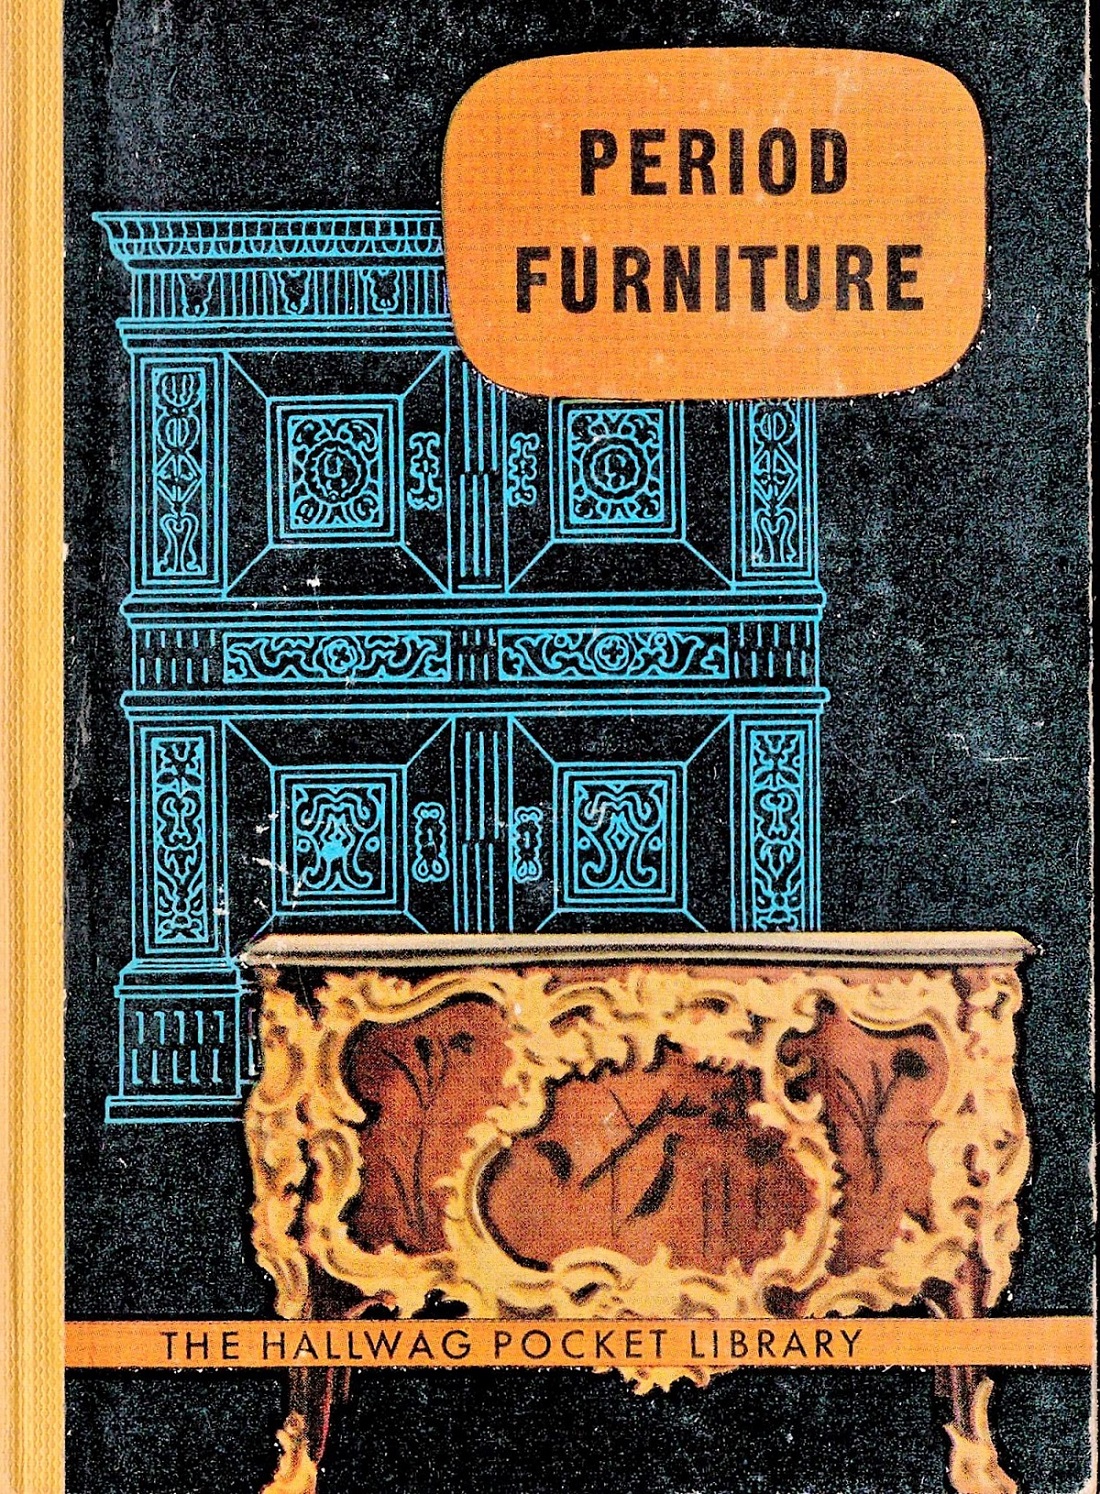 The Hallwag Pocket Library Period Furniture by E Gradmann 1955 Hardback Book published by Edward